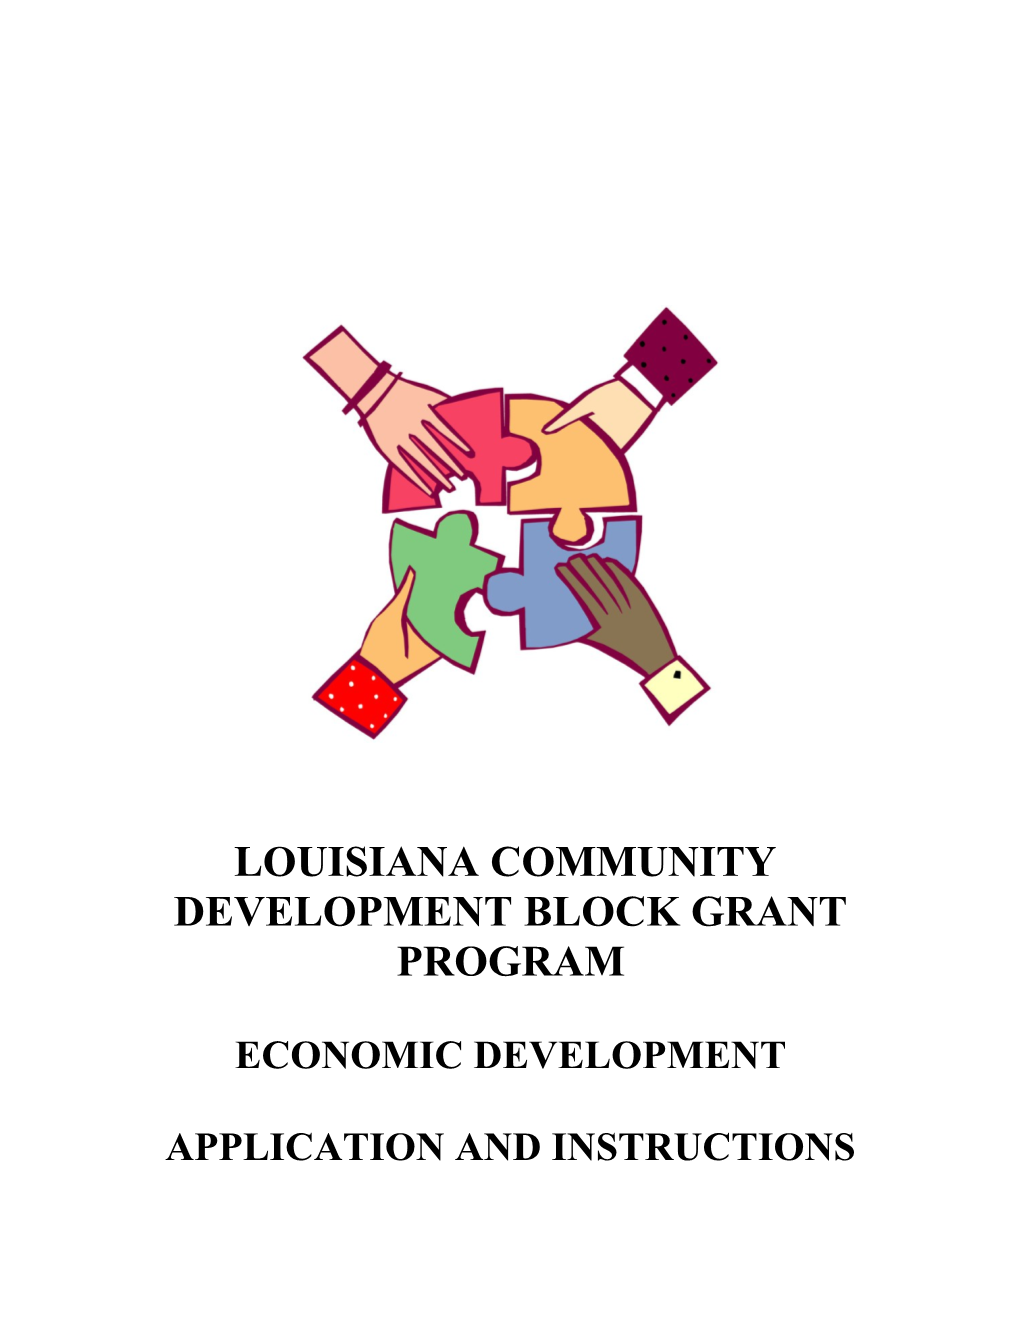 Development Block Grant Program